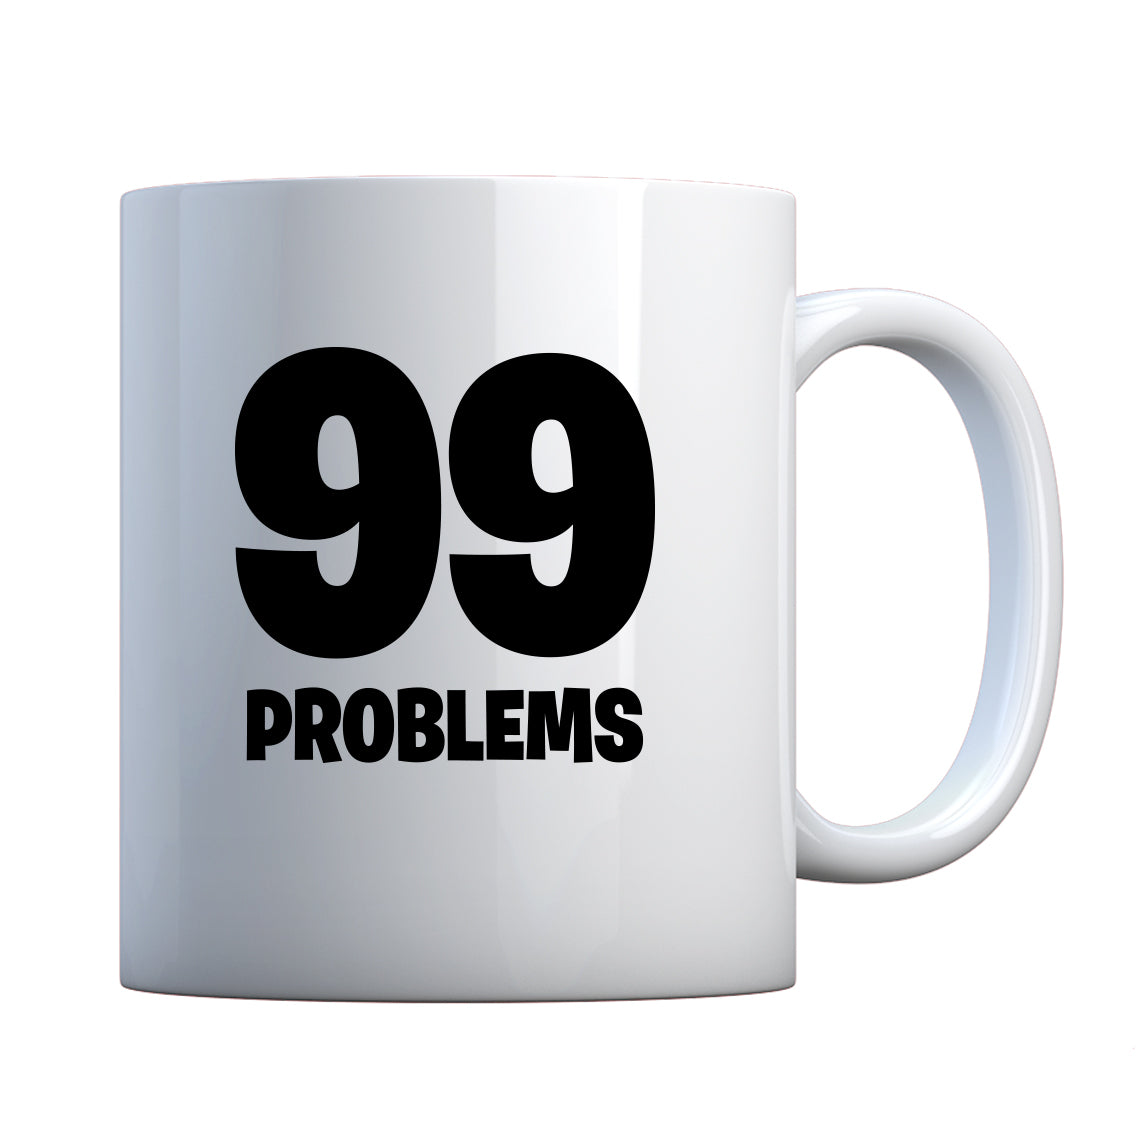 Mug 99 Problems Ceramic Gift Mug